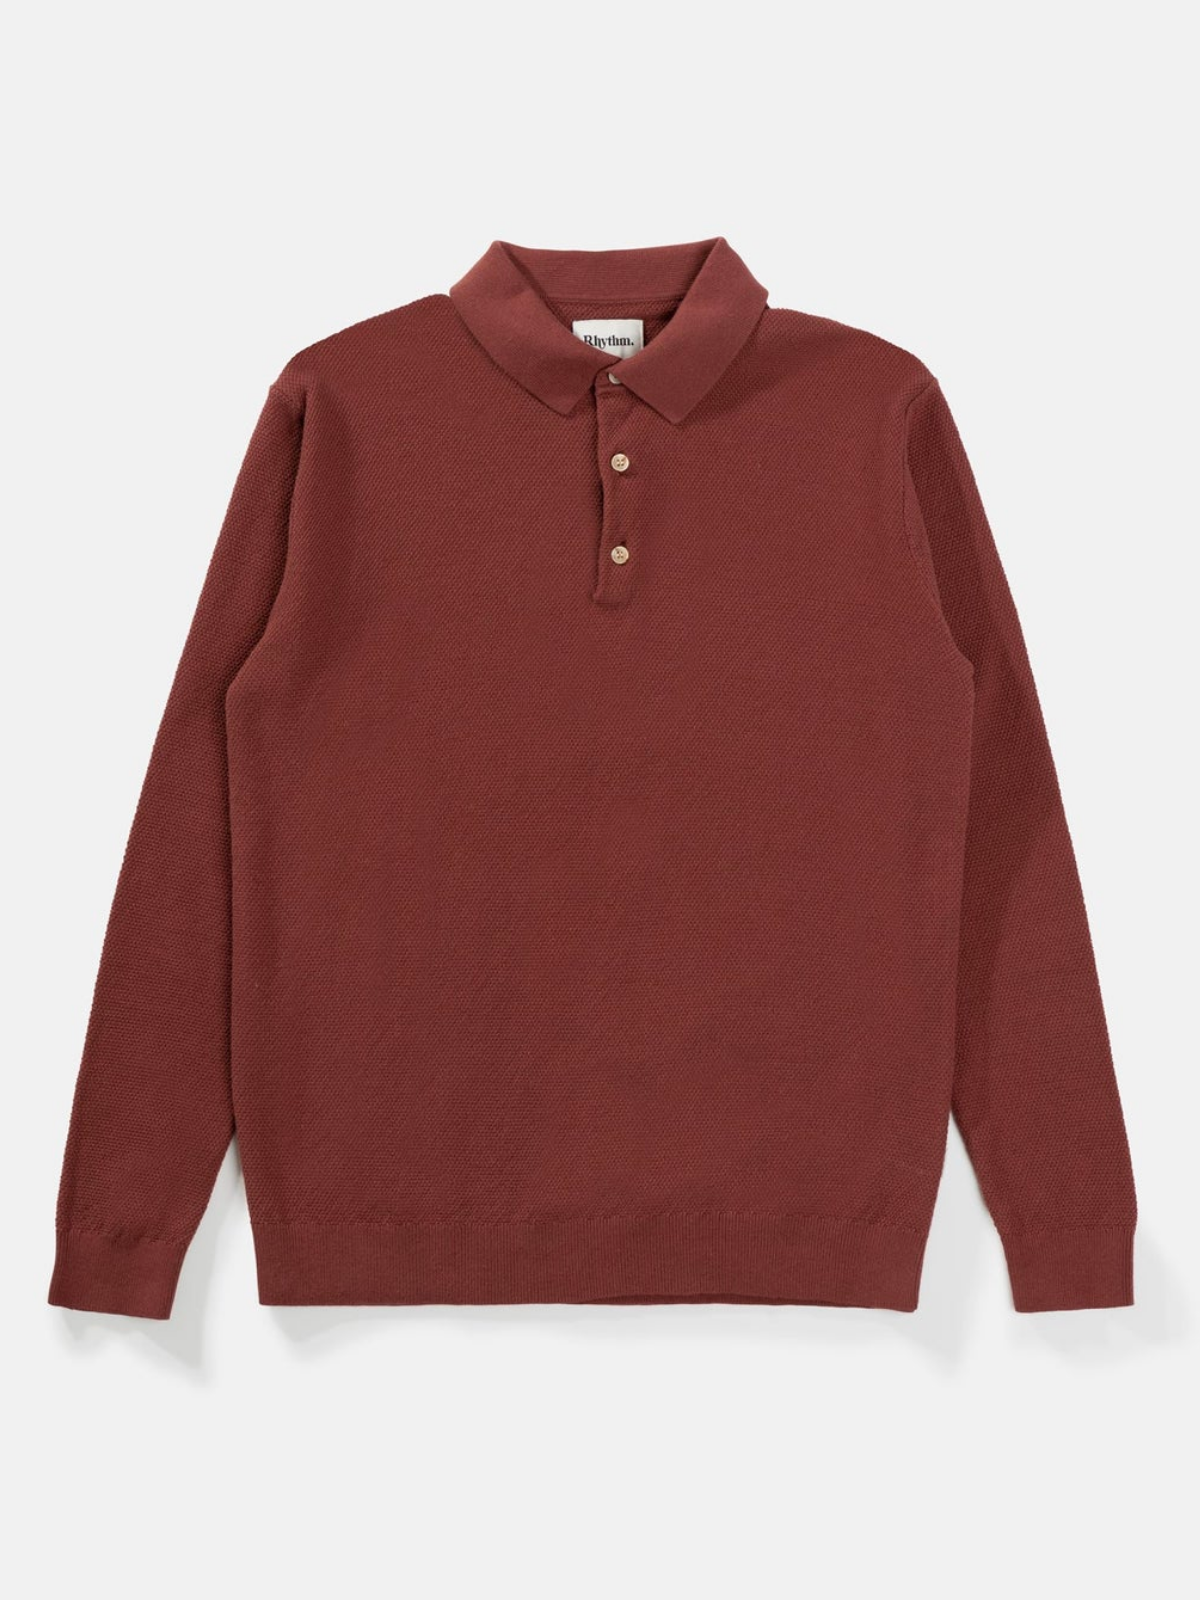 rhythm textured knit ls long sleeve polo brick red orange brown cotton sweater kempt athens ga georgia men's clothing store